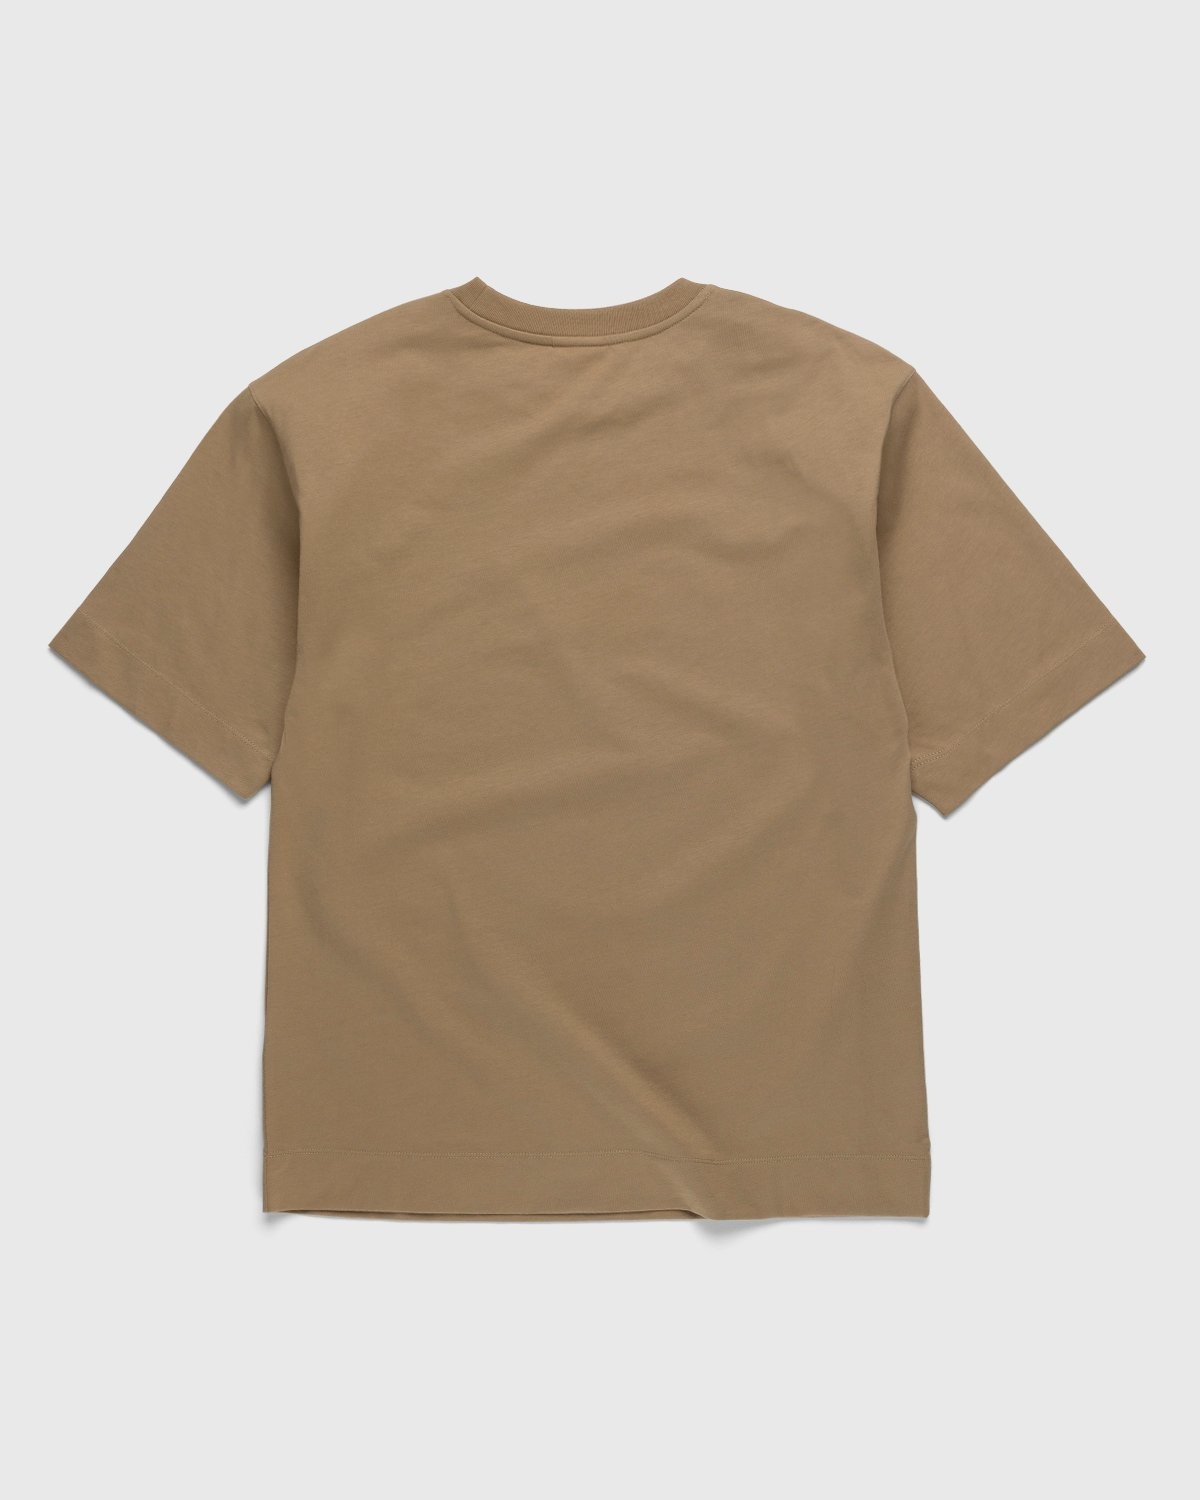 Dries van Noten – Heli Graphic T-Shirt Sand - T-shirts - Beige - Image 2